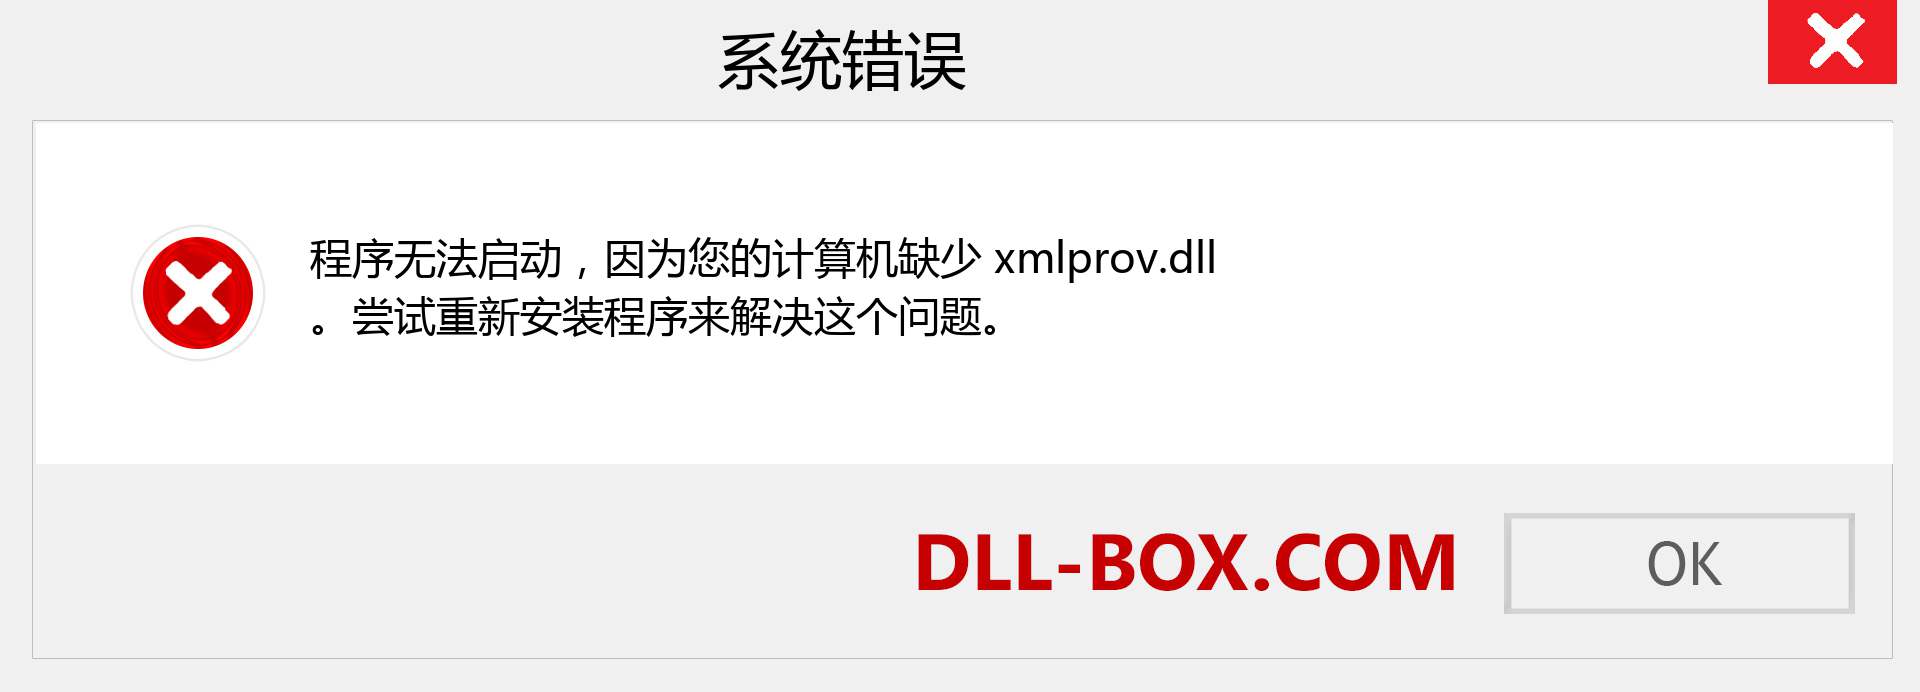 xmlprov.dll 文件丢失？。 适用于 Windows 7、8、10 的下载 - 修复 Windows、照片、图像上的 xmlprov dll 丢失错误